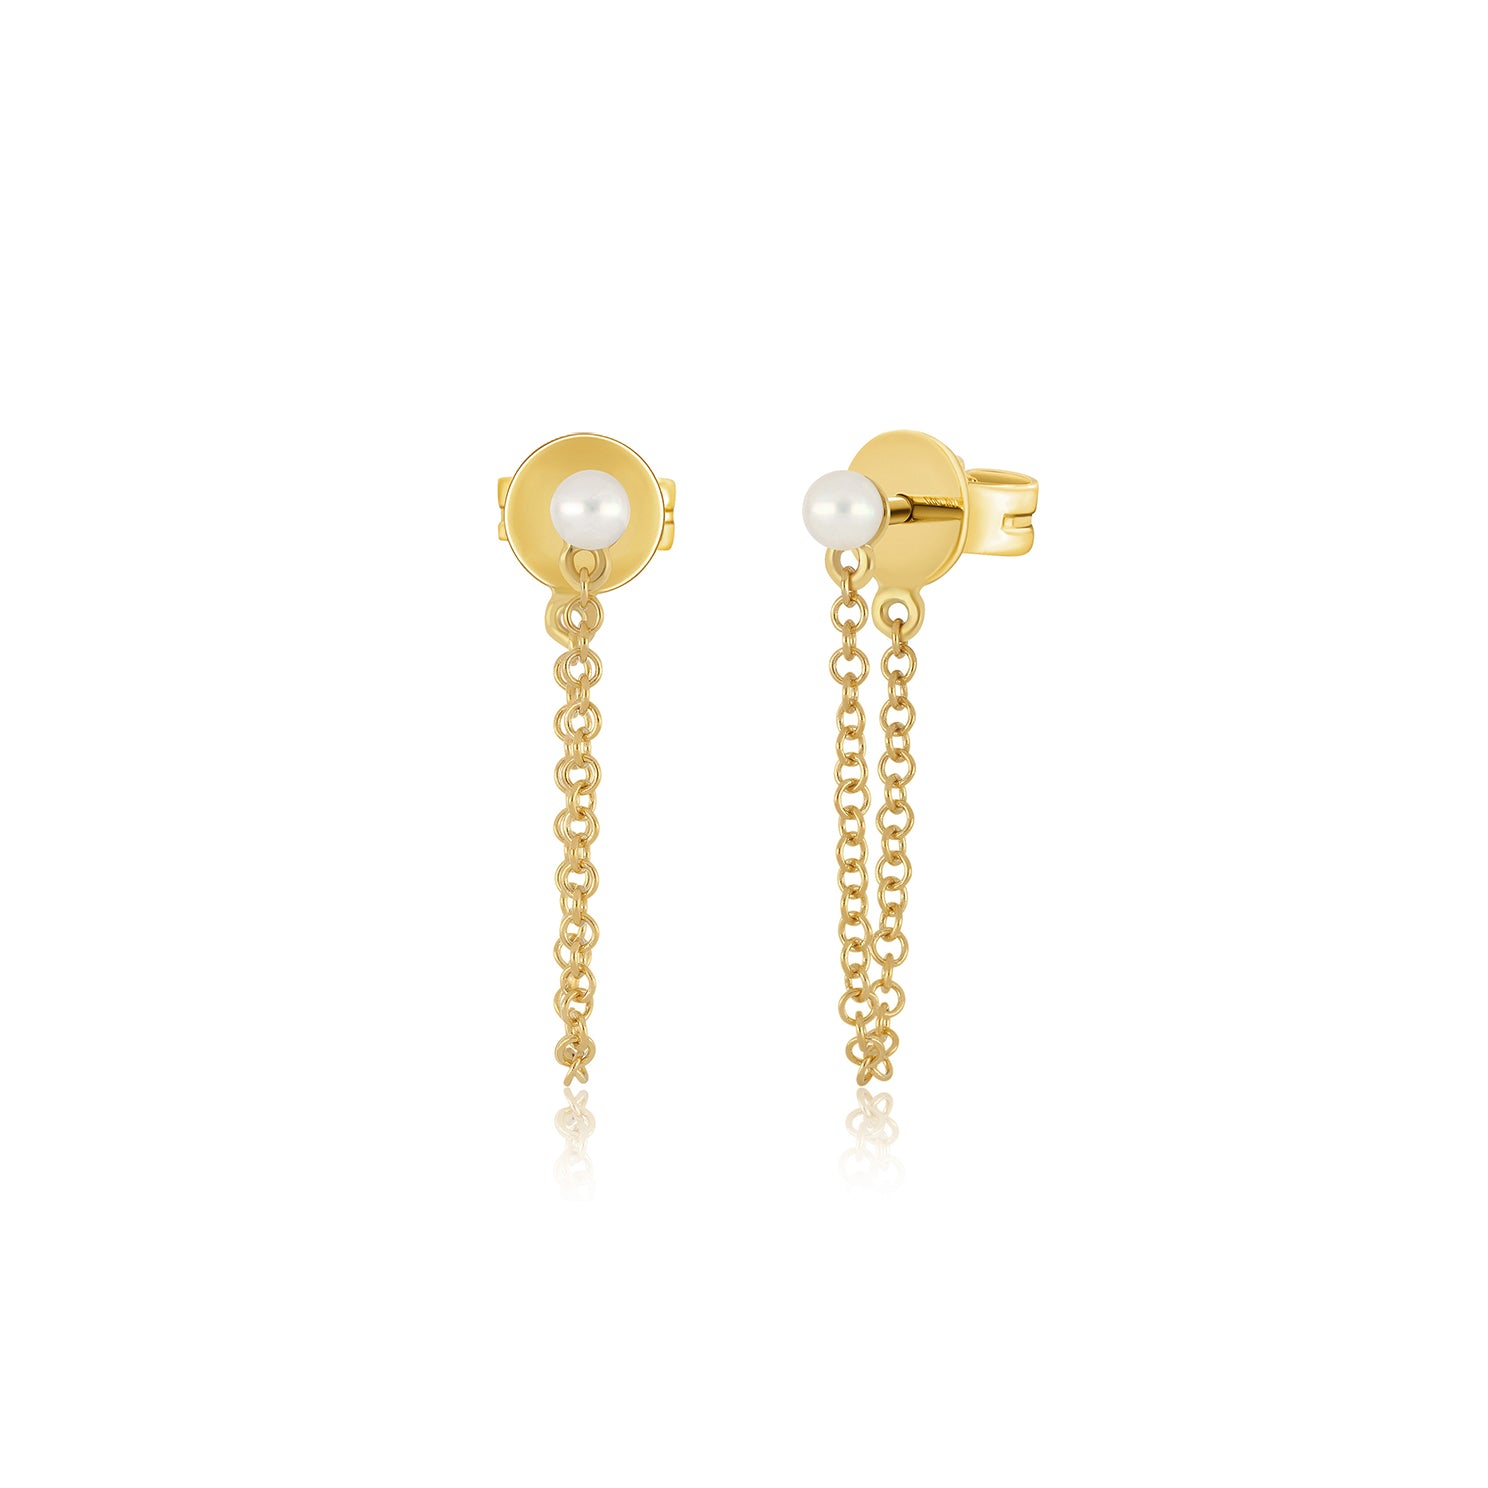 Pearl Chain Stud Earring in 14k yellow gold